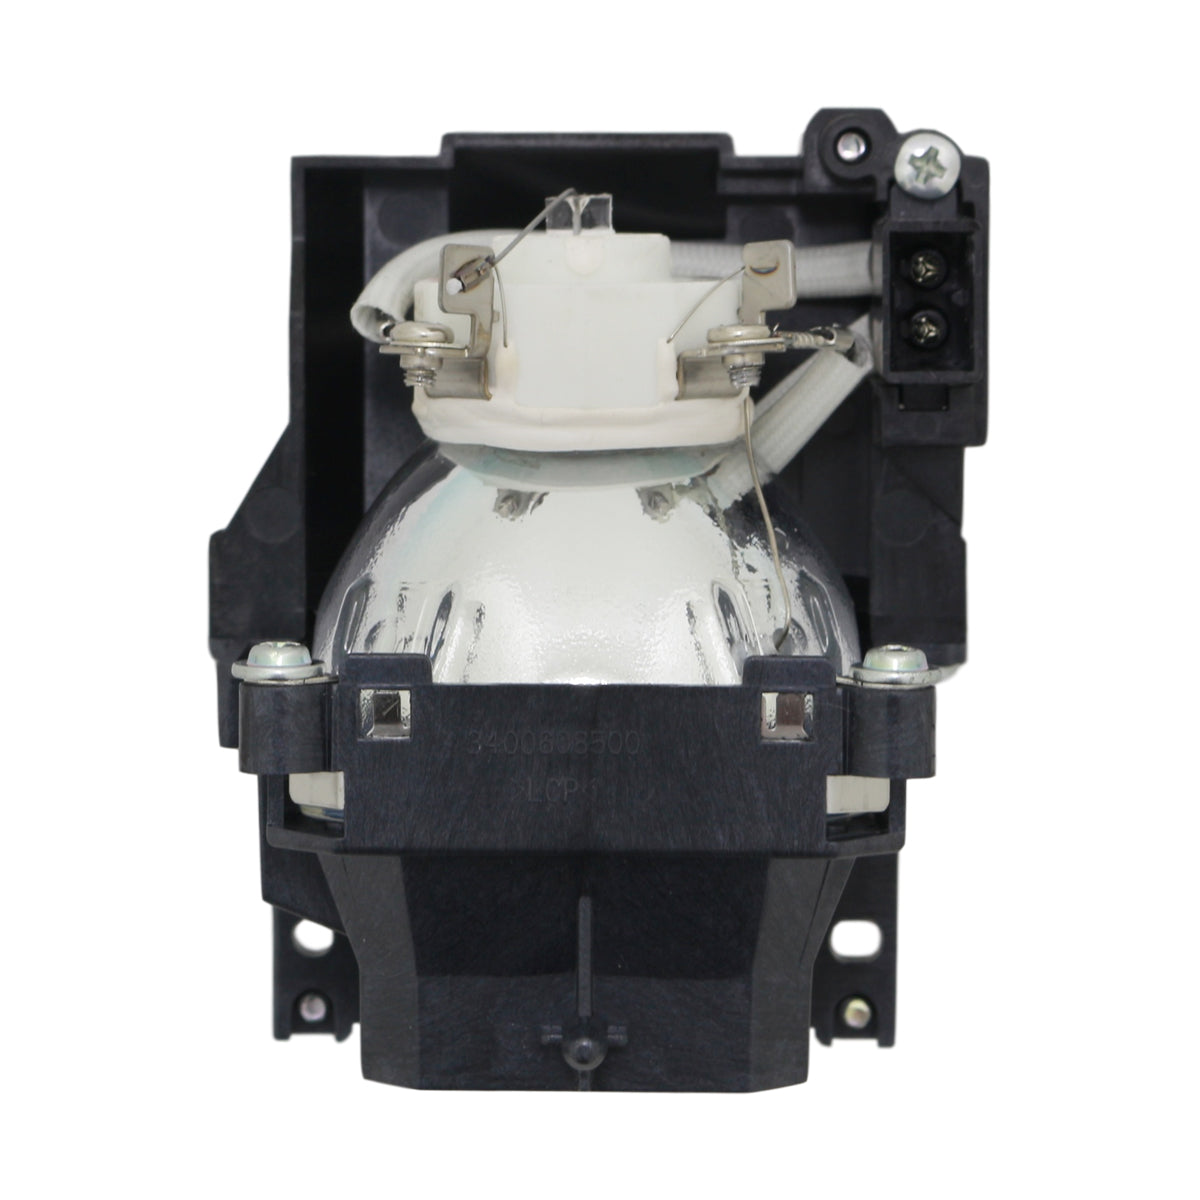 ACTO 1300052500 Ushio Projector Lamp Module